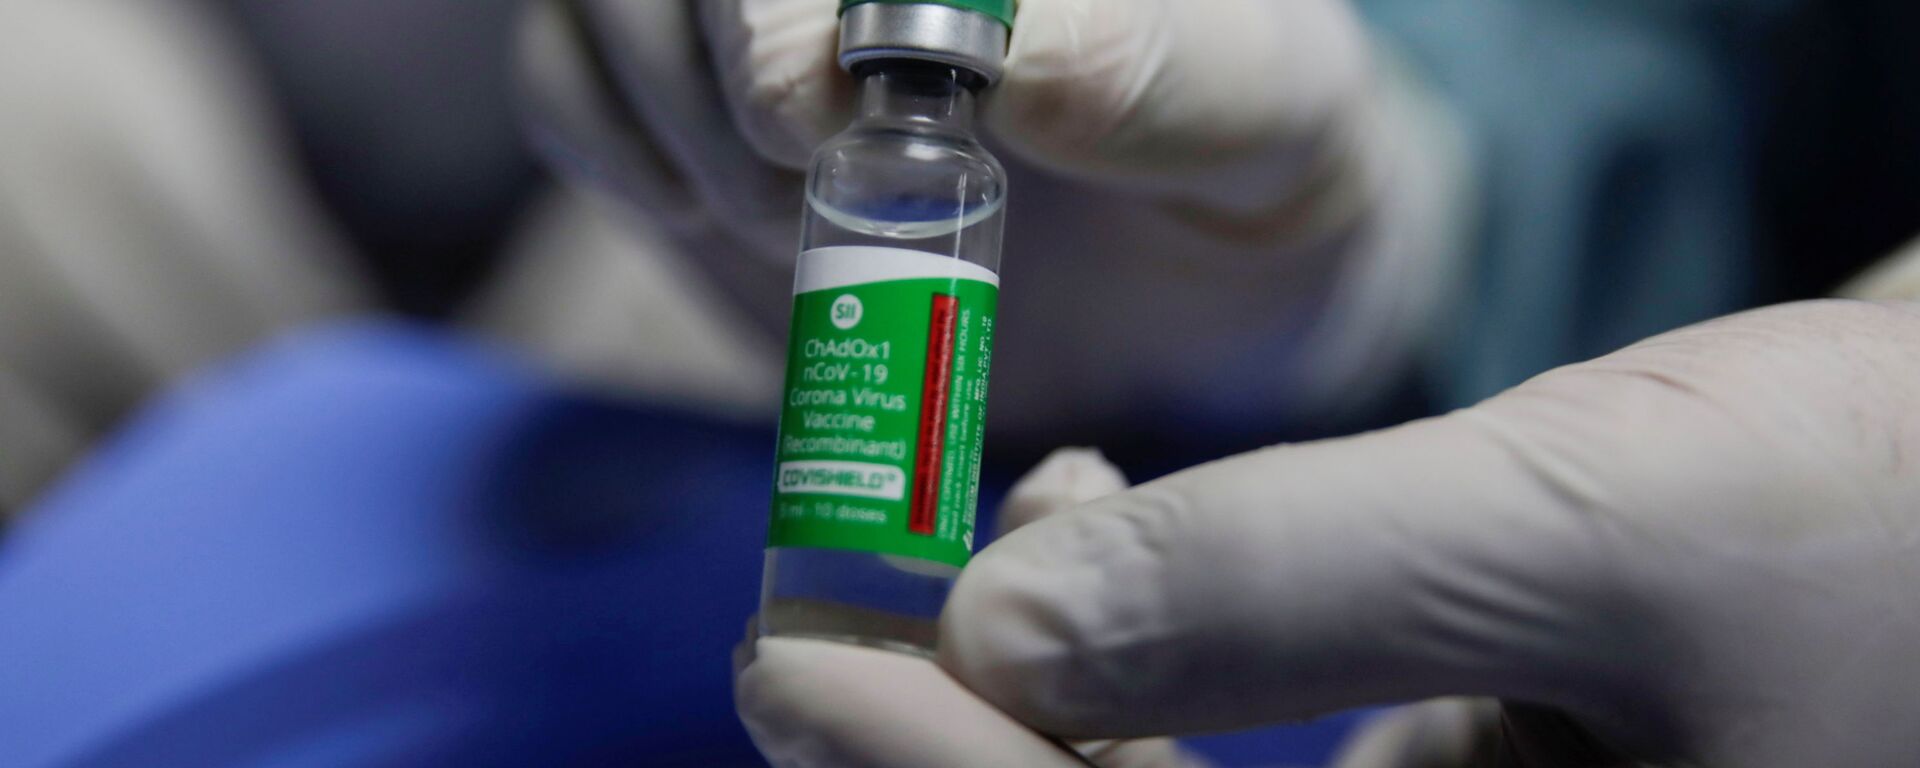 La vacuna Covishield producida por el Serum Institute de la India - Sputnik Mundo, 1920, 09.02.2021